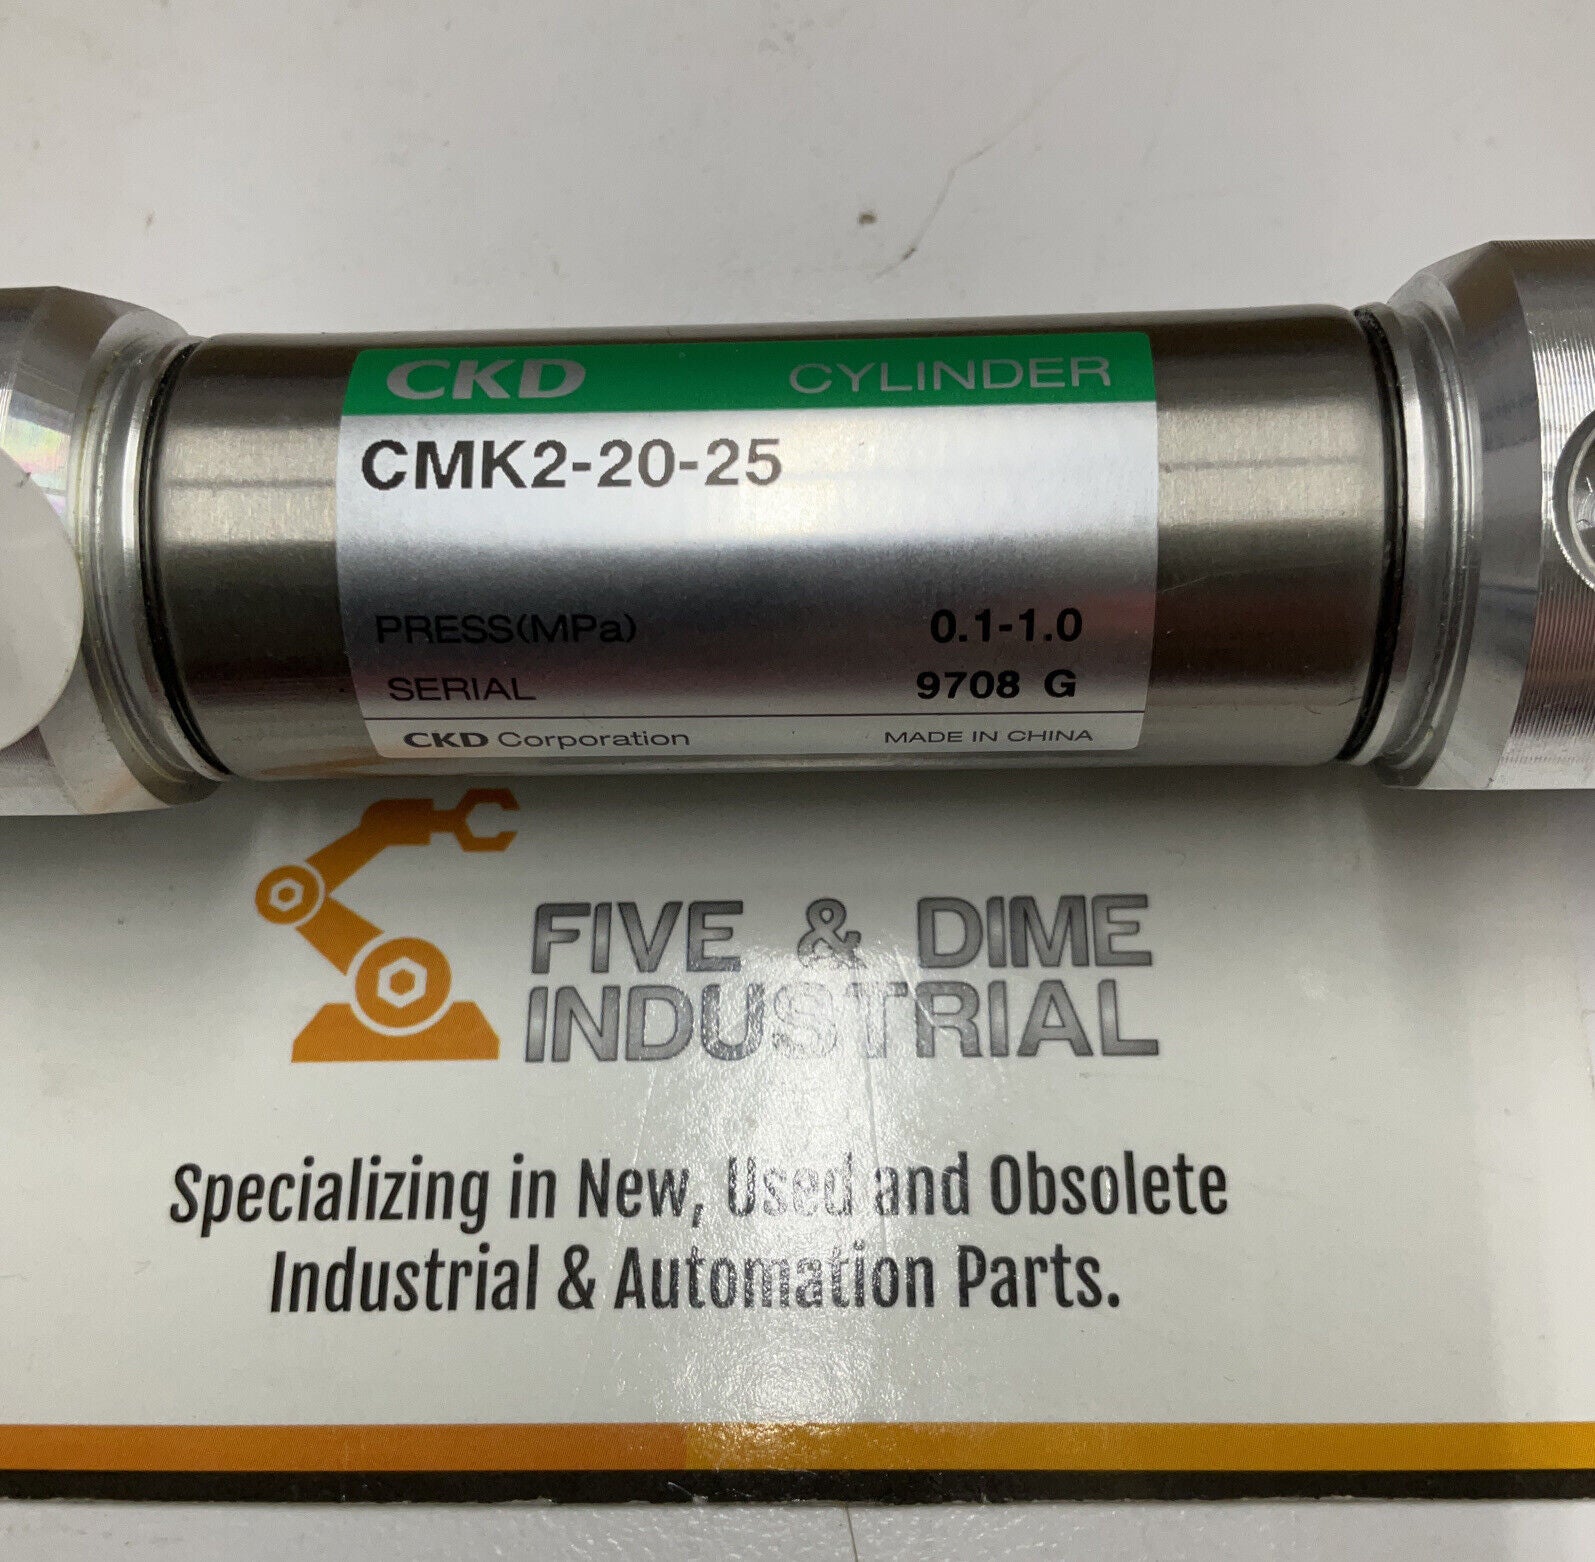 CKD CMK2-20-25 New Pneumatic Cylinder 0.1-1.0 MPa (CL346) - 0